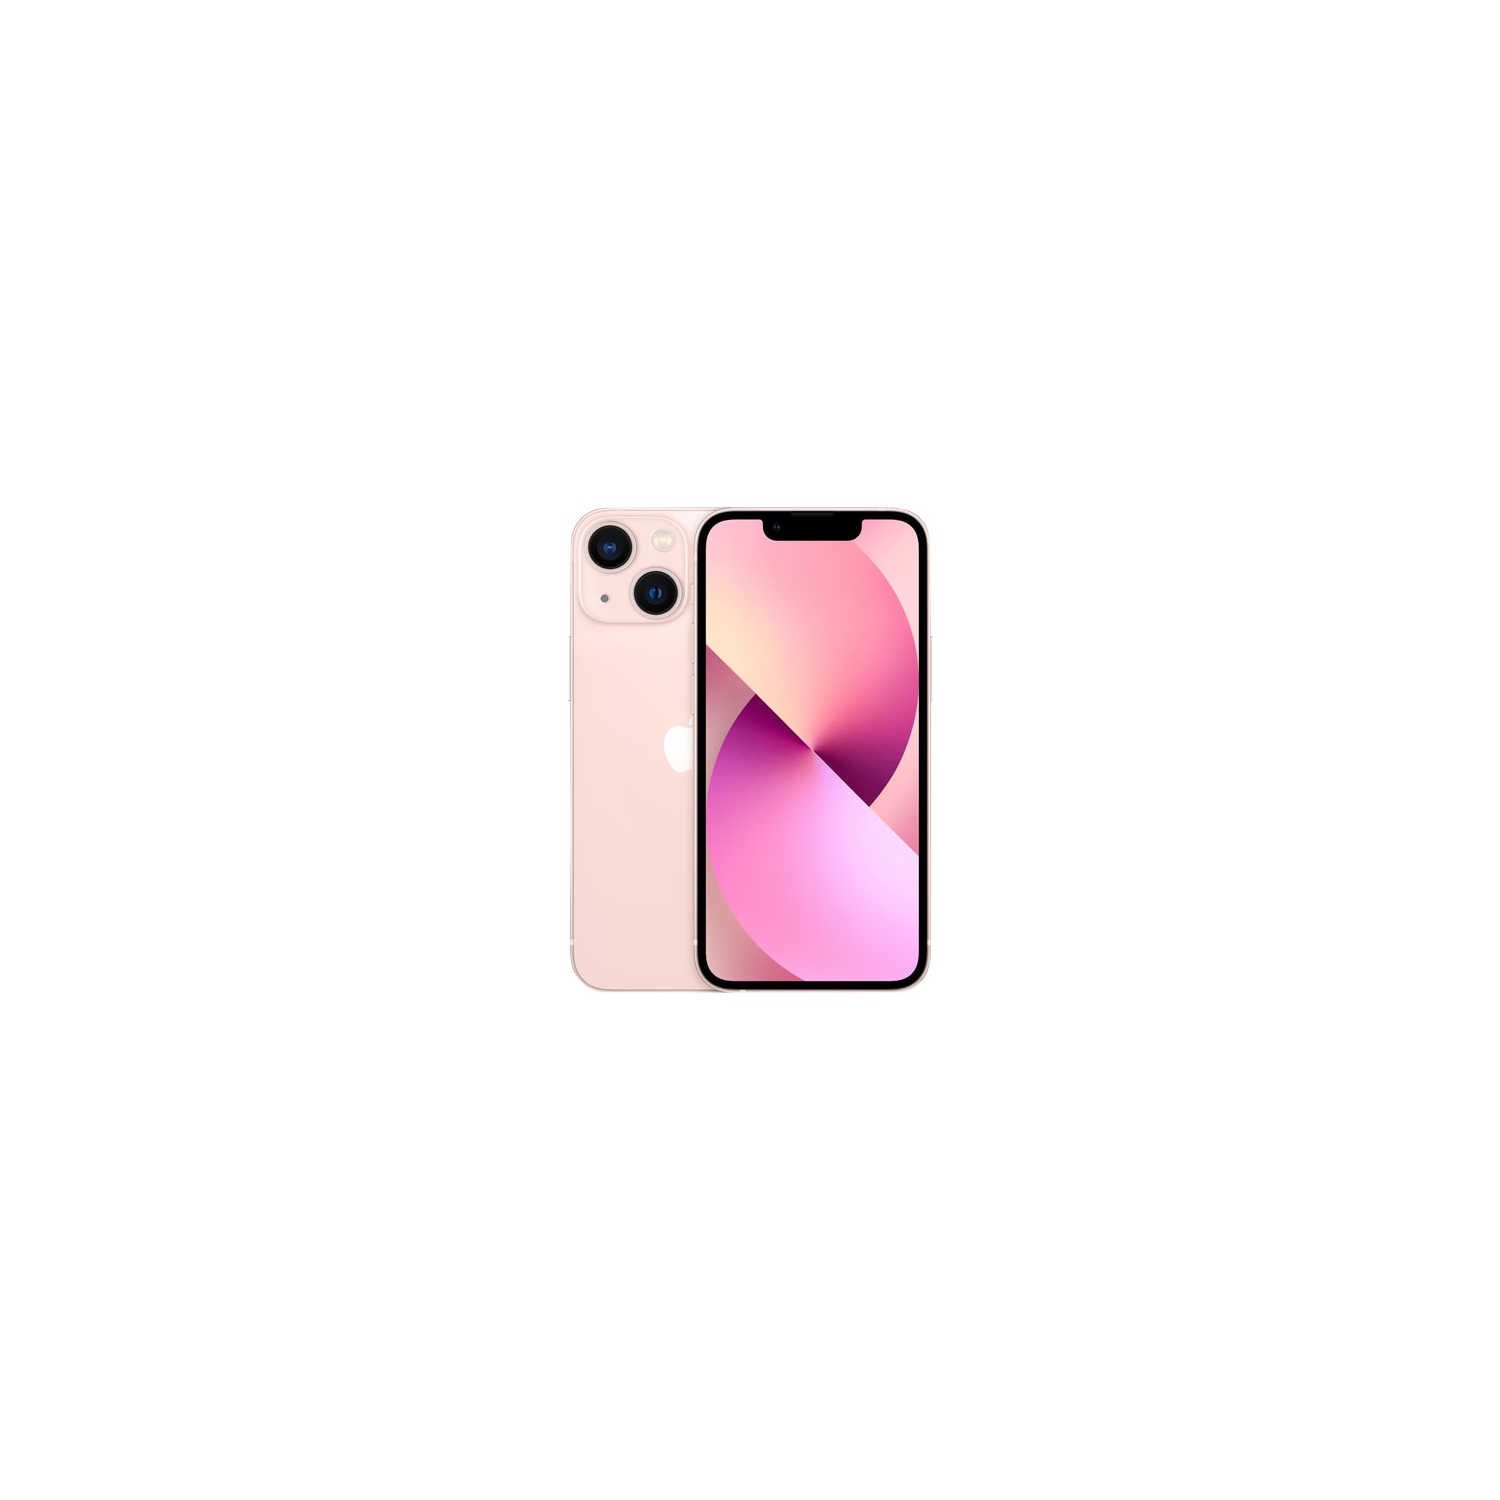 Apple iPhone 13 mini 512GB - Pink - Unlocked - New